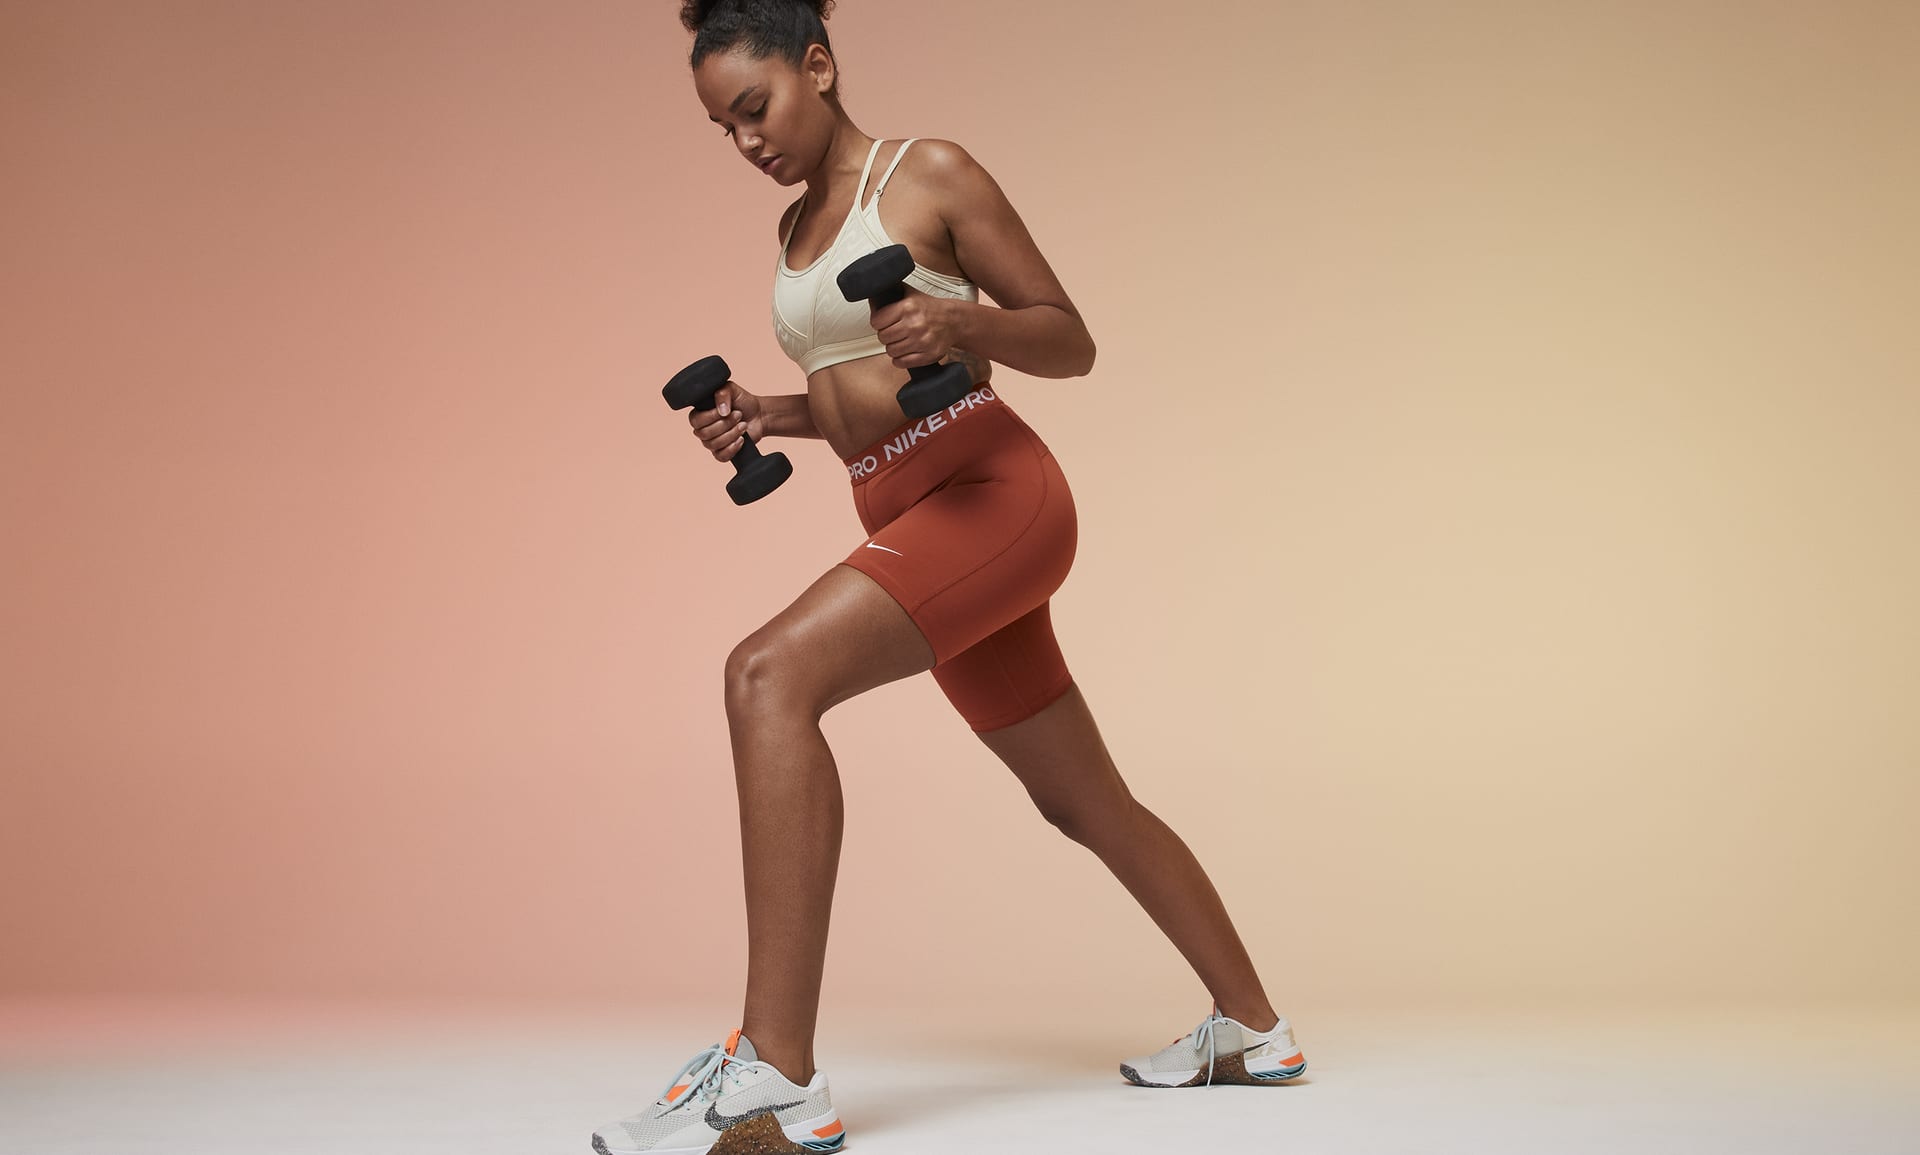 Nike Pro 365 Women's High-Waisted 7 Shorts.